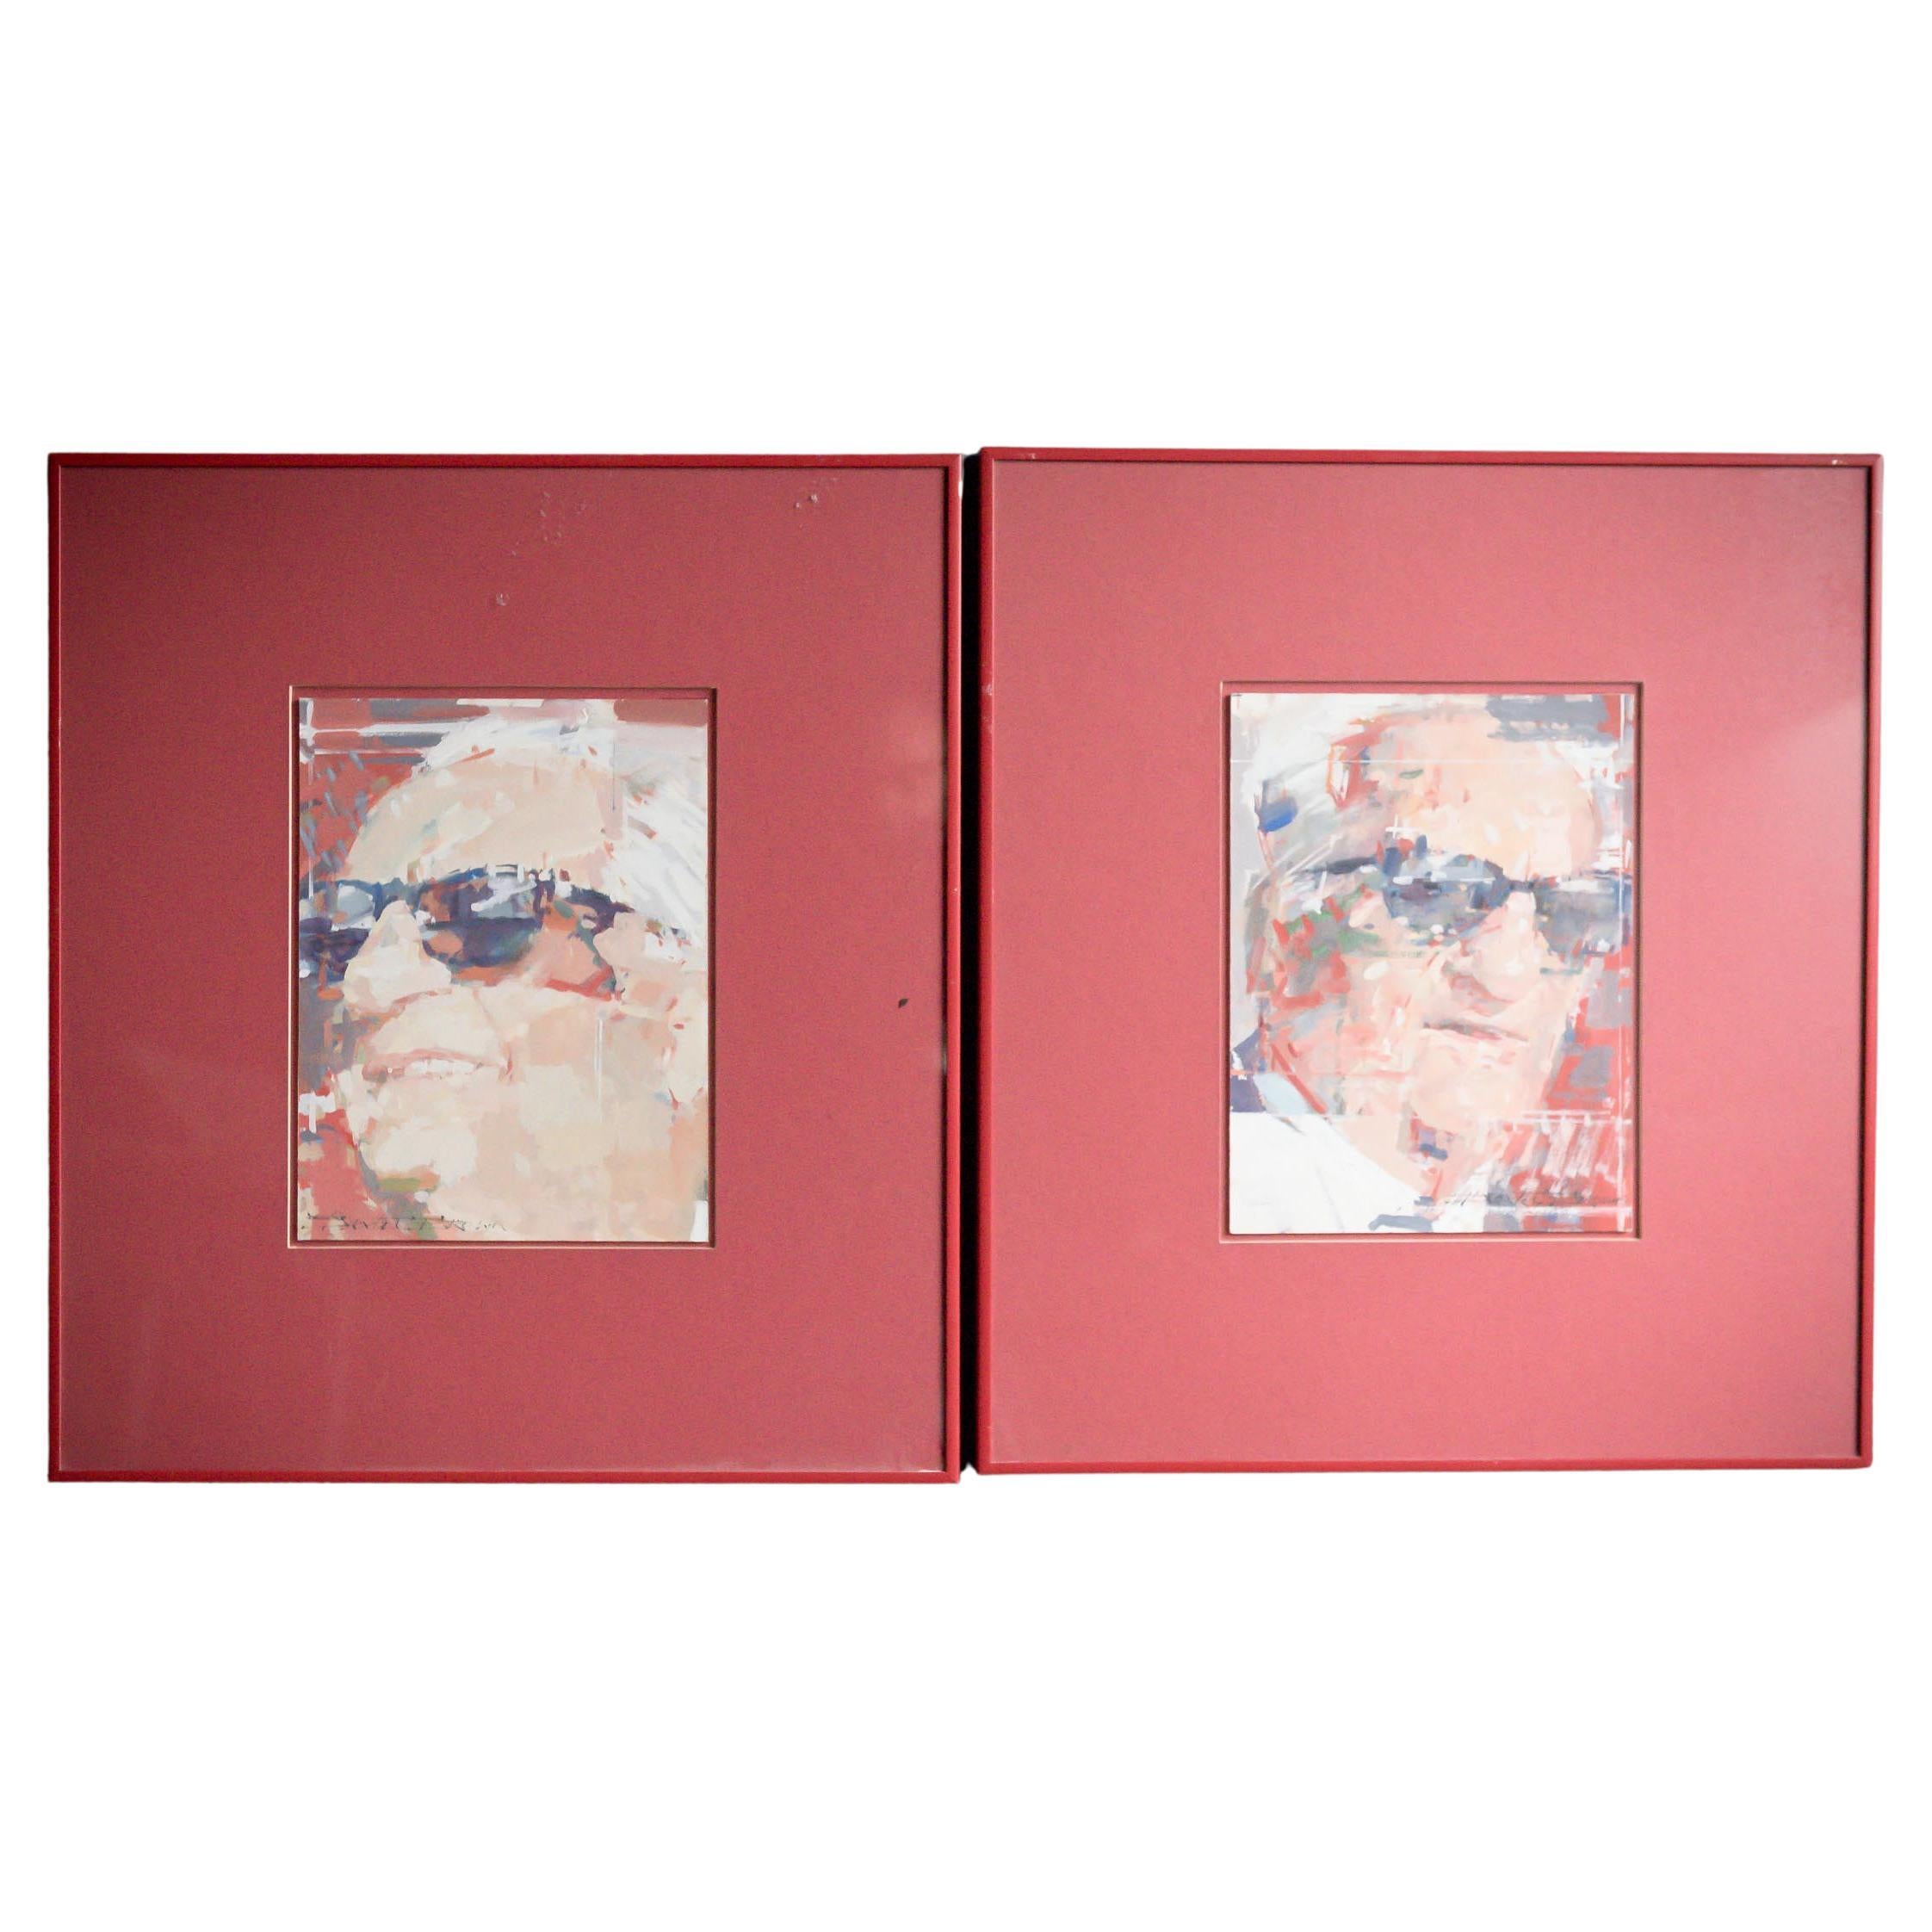 Portraits duo d'Enzo Ferrari à l'aquarelle, marron de graphisme